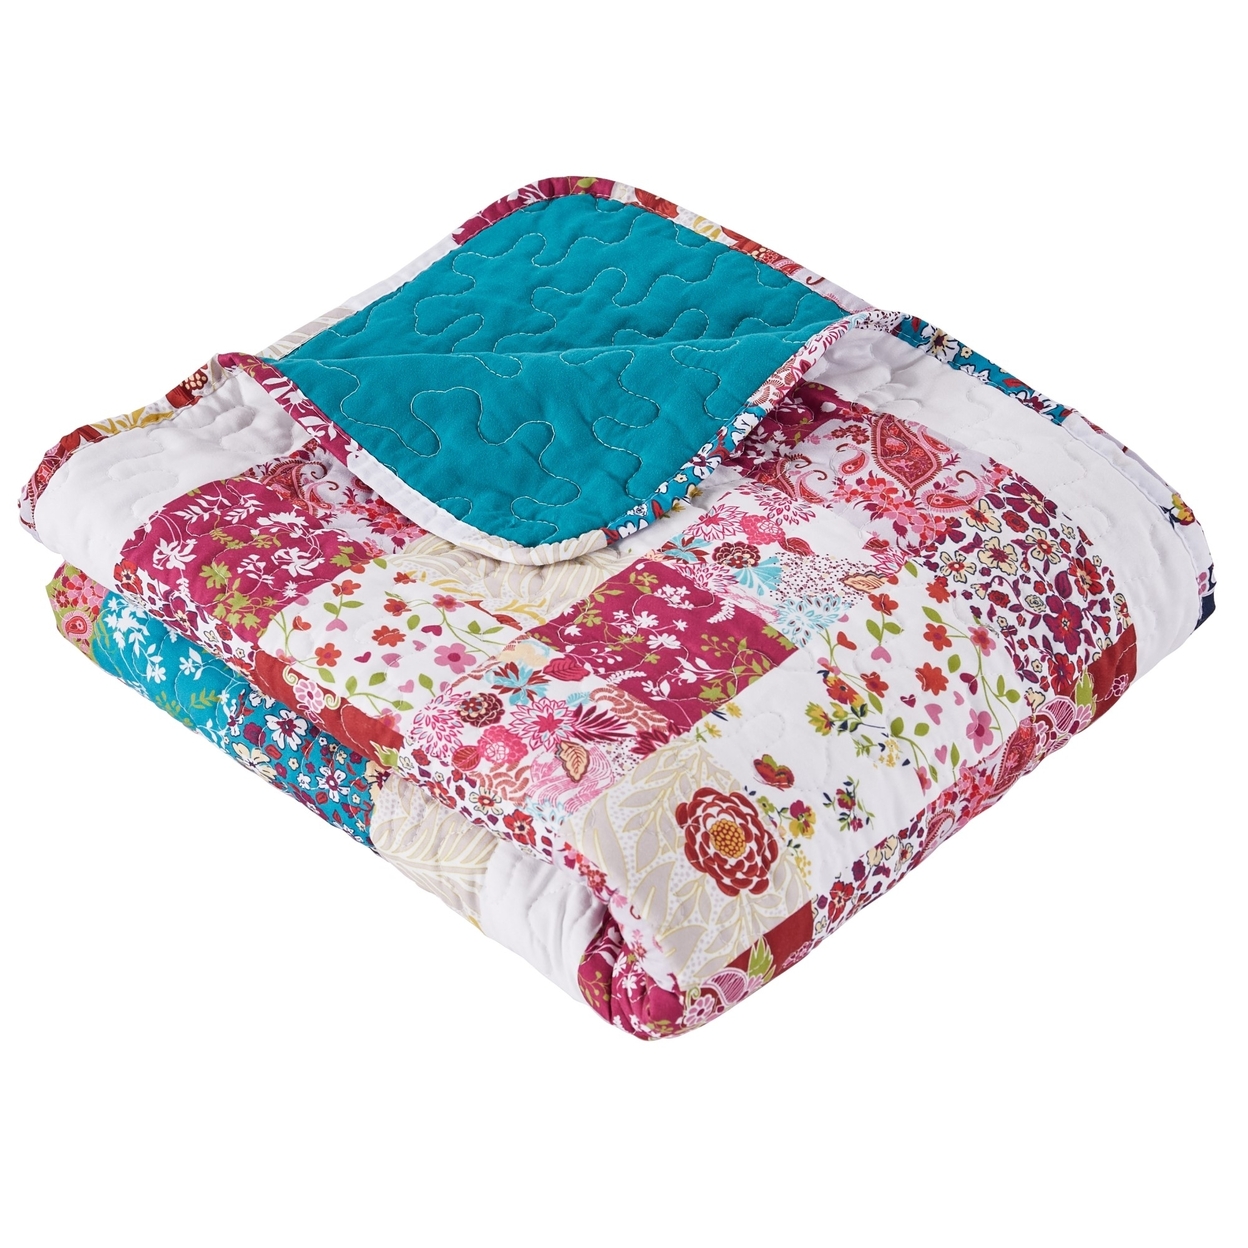 Zay 60 Inch Throw Blanket, Patchwork Floral Print, Teal Blue Microfiber- Saltoro Sherpi